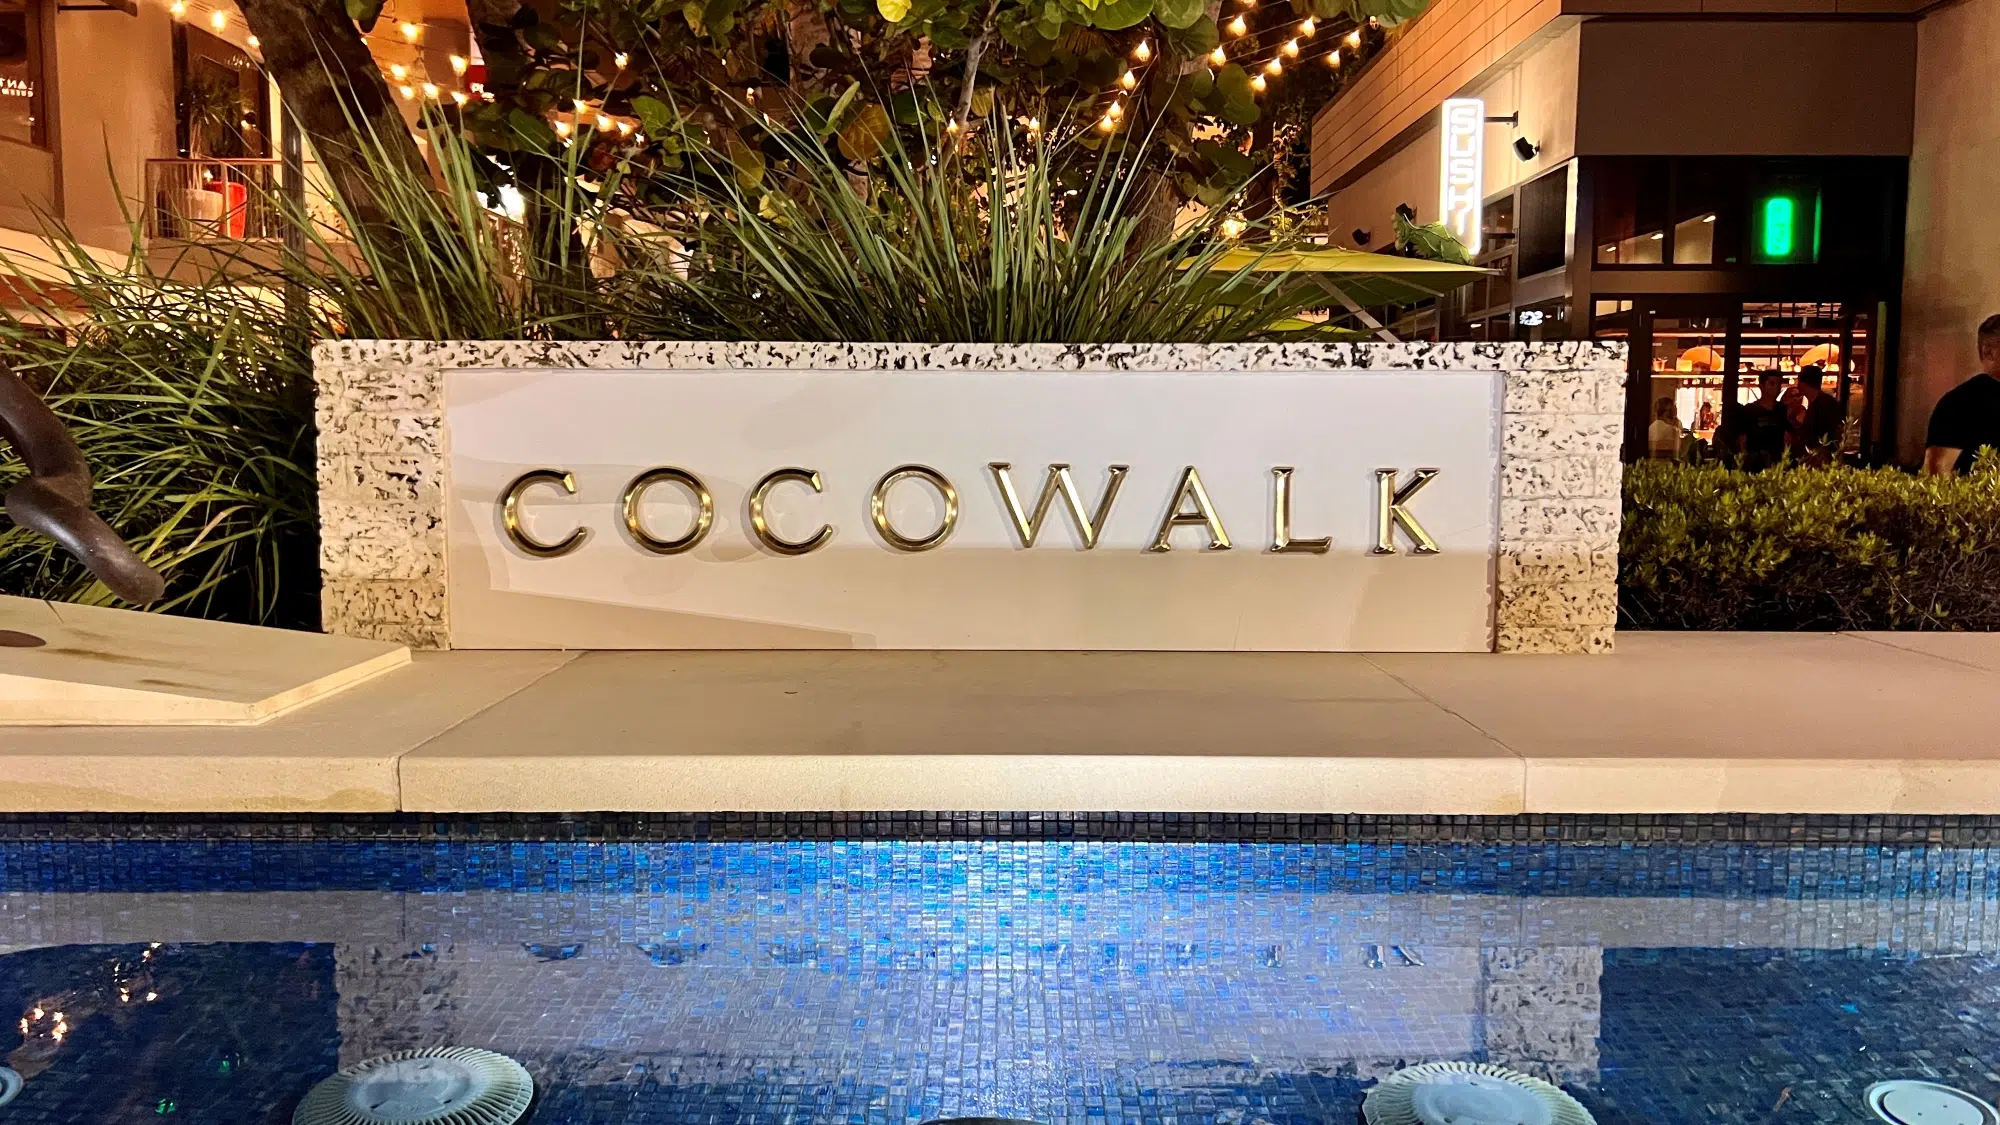 Cocowalk in Coconut Grove